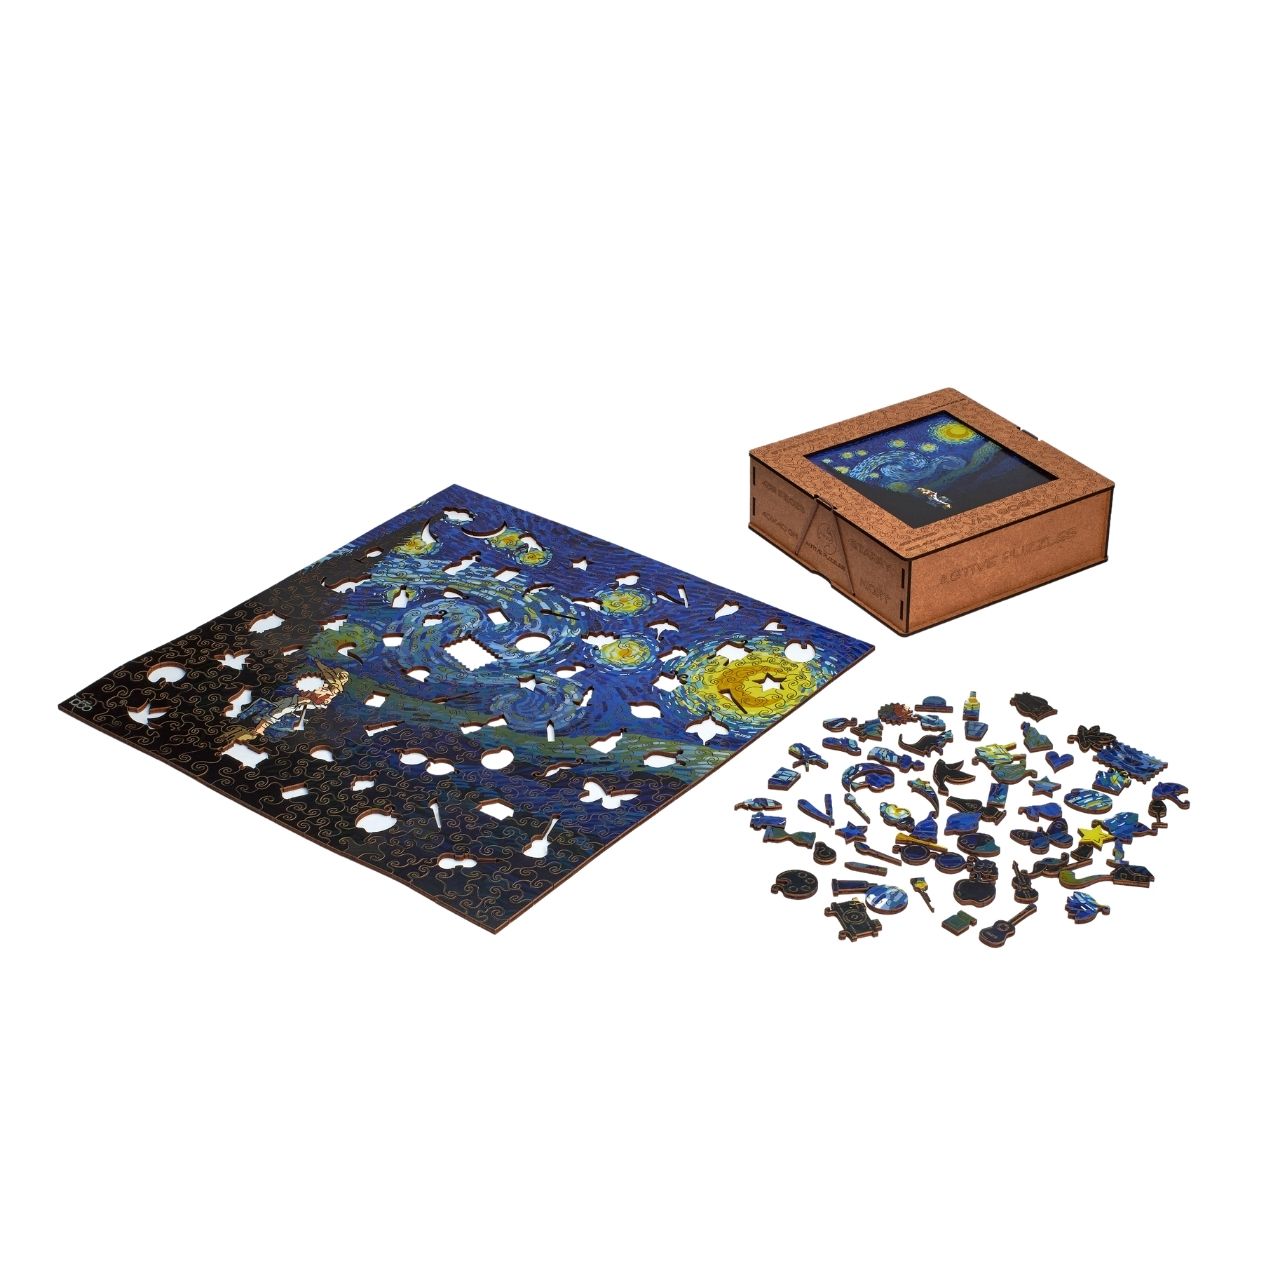 Van Gogh Wooden Puzzle | Wooden Art Puzzle Active Puzzles